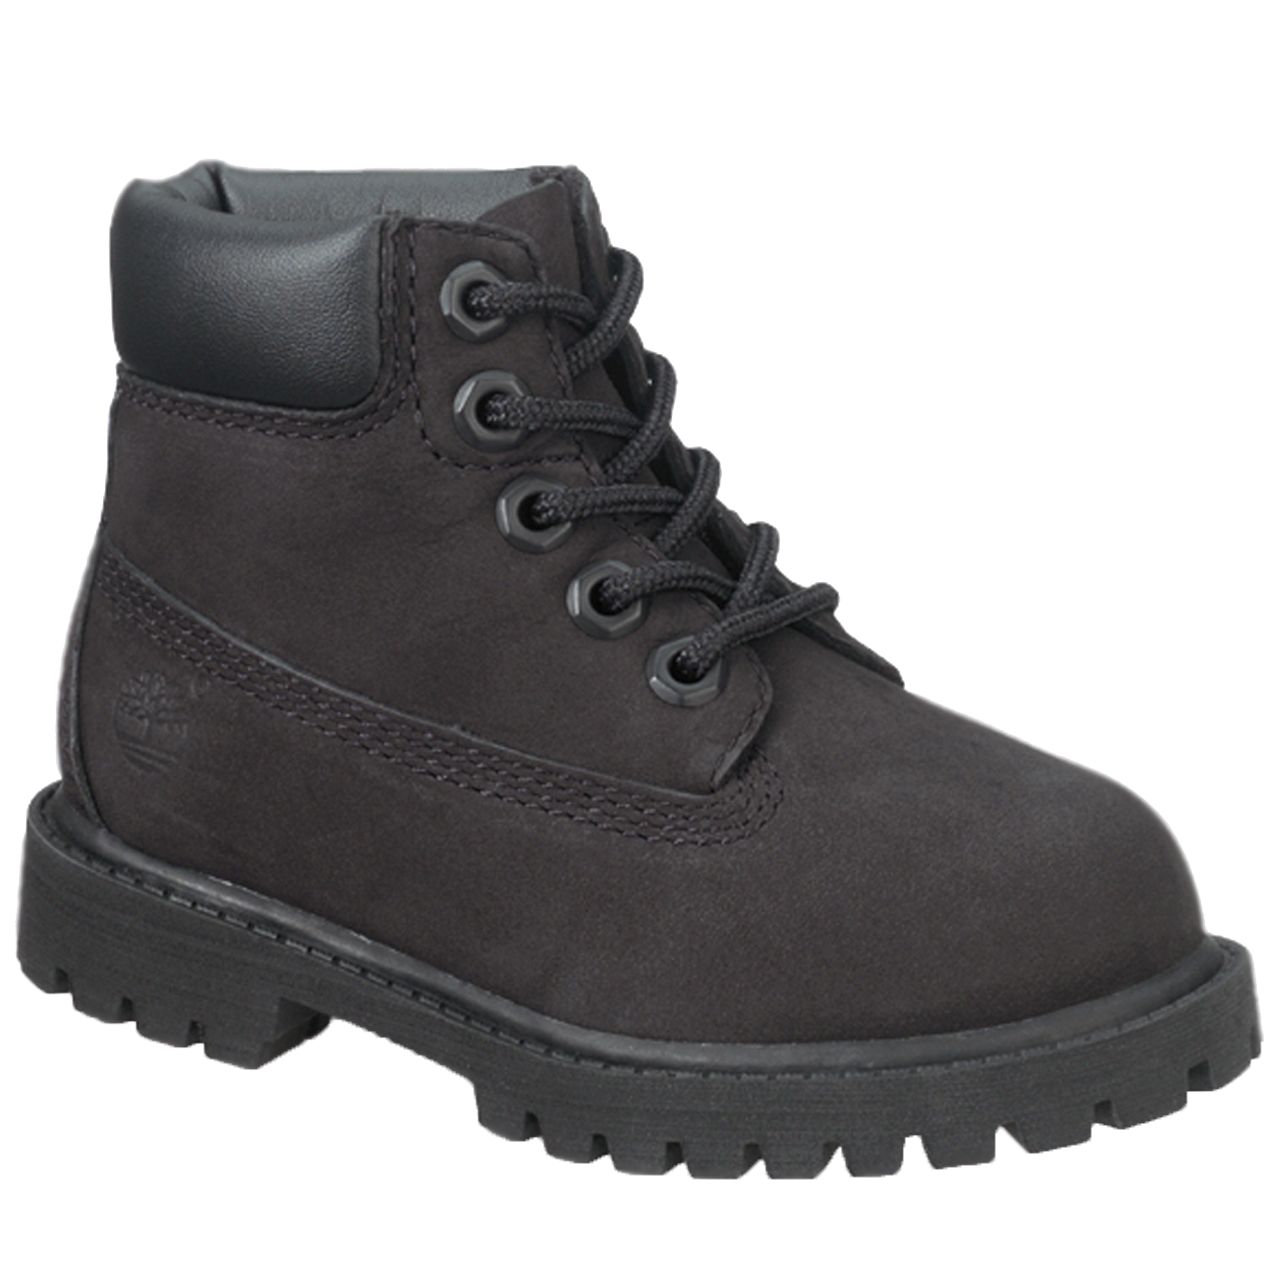 Waterproof Nubuck Leather Boots, Black 